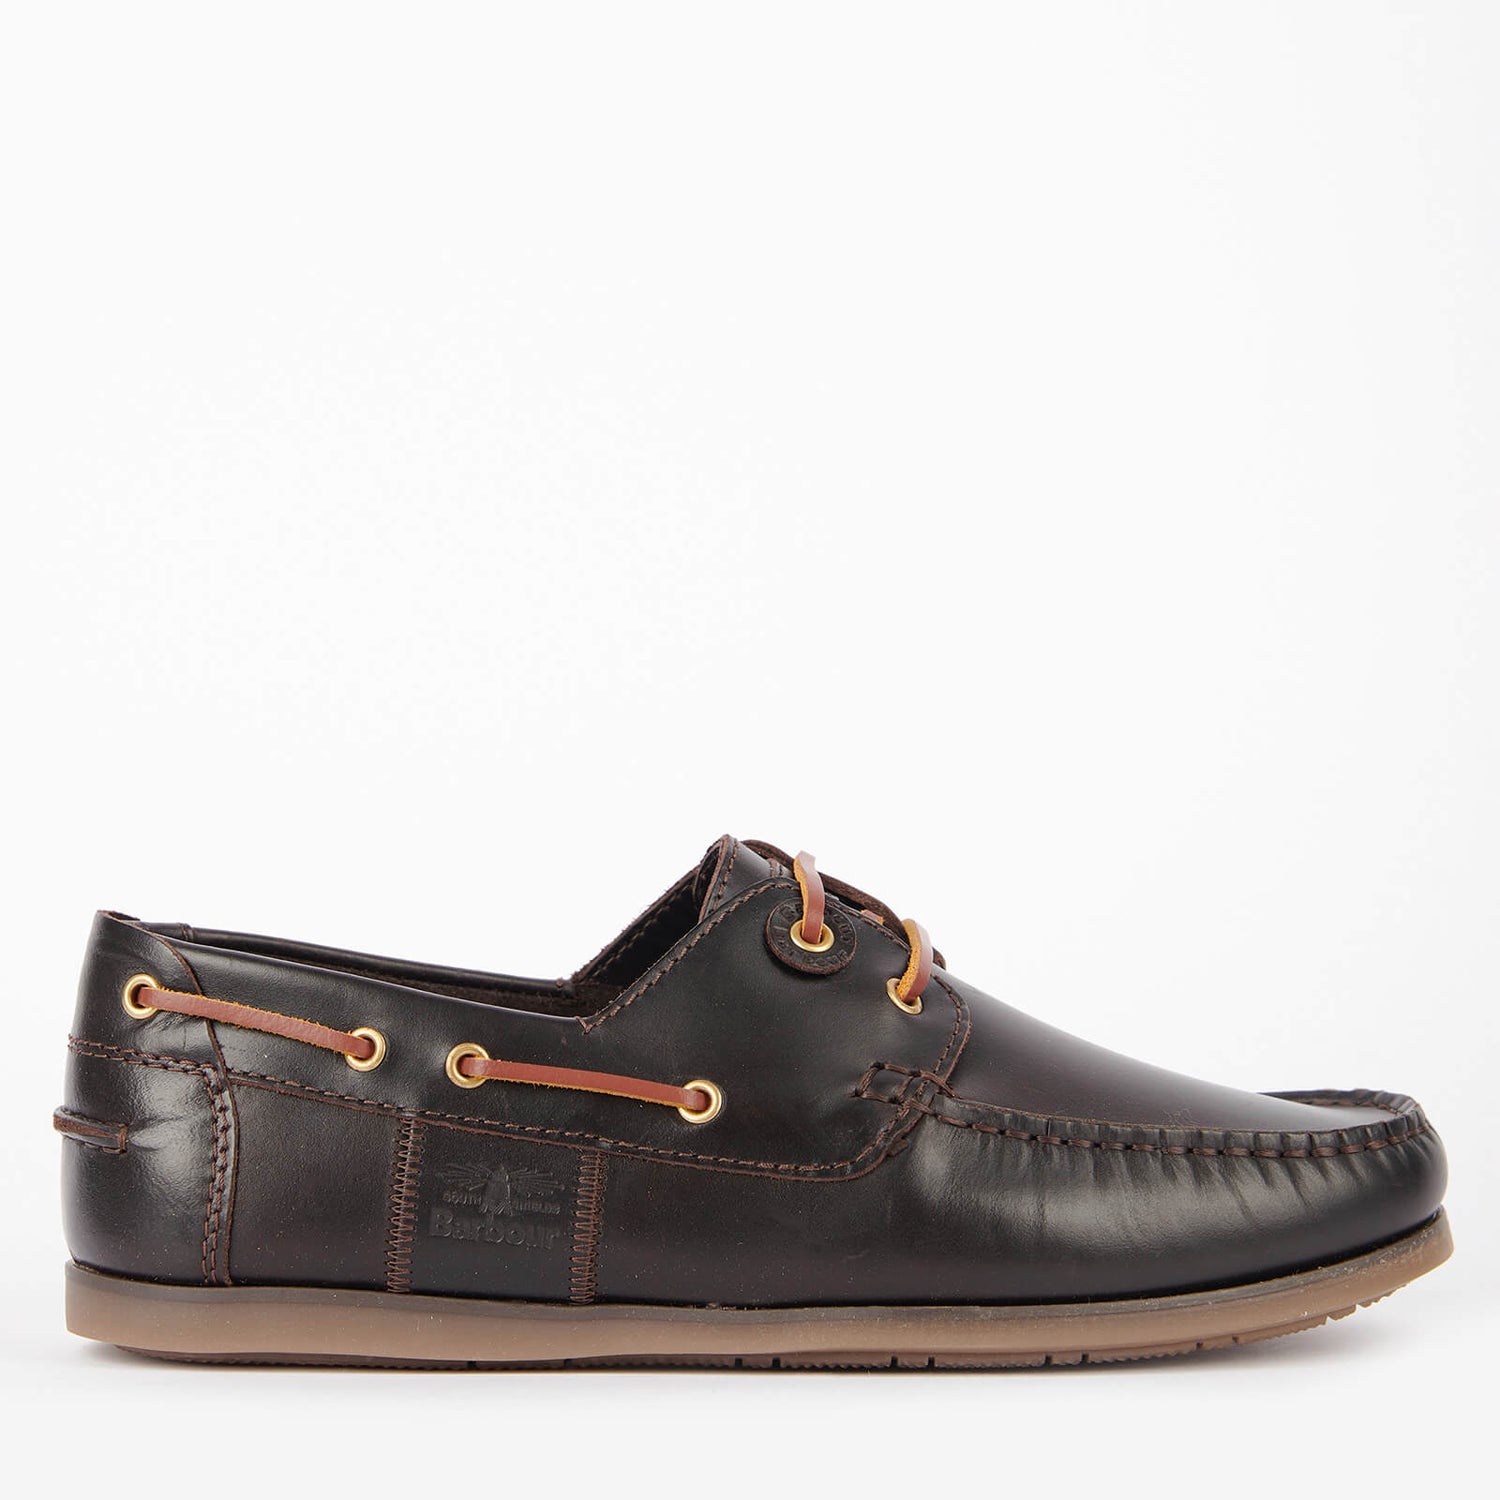 Barbour Men's Capstan Leather Boat Shoes - Dark Brown - UK 7